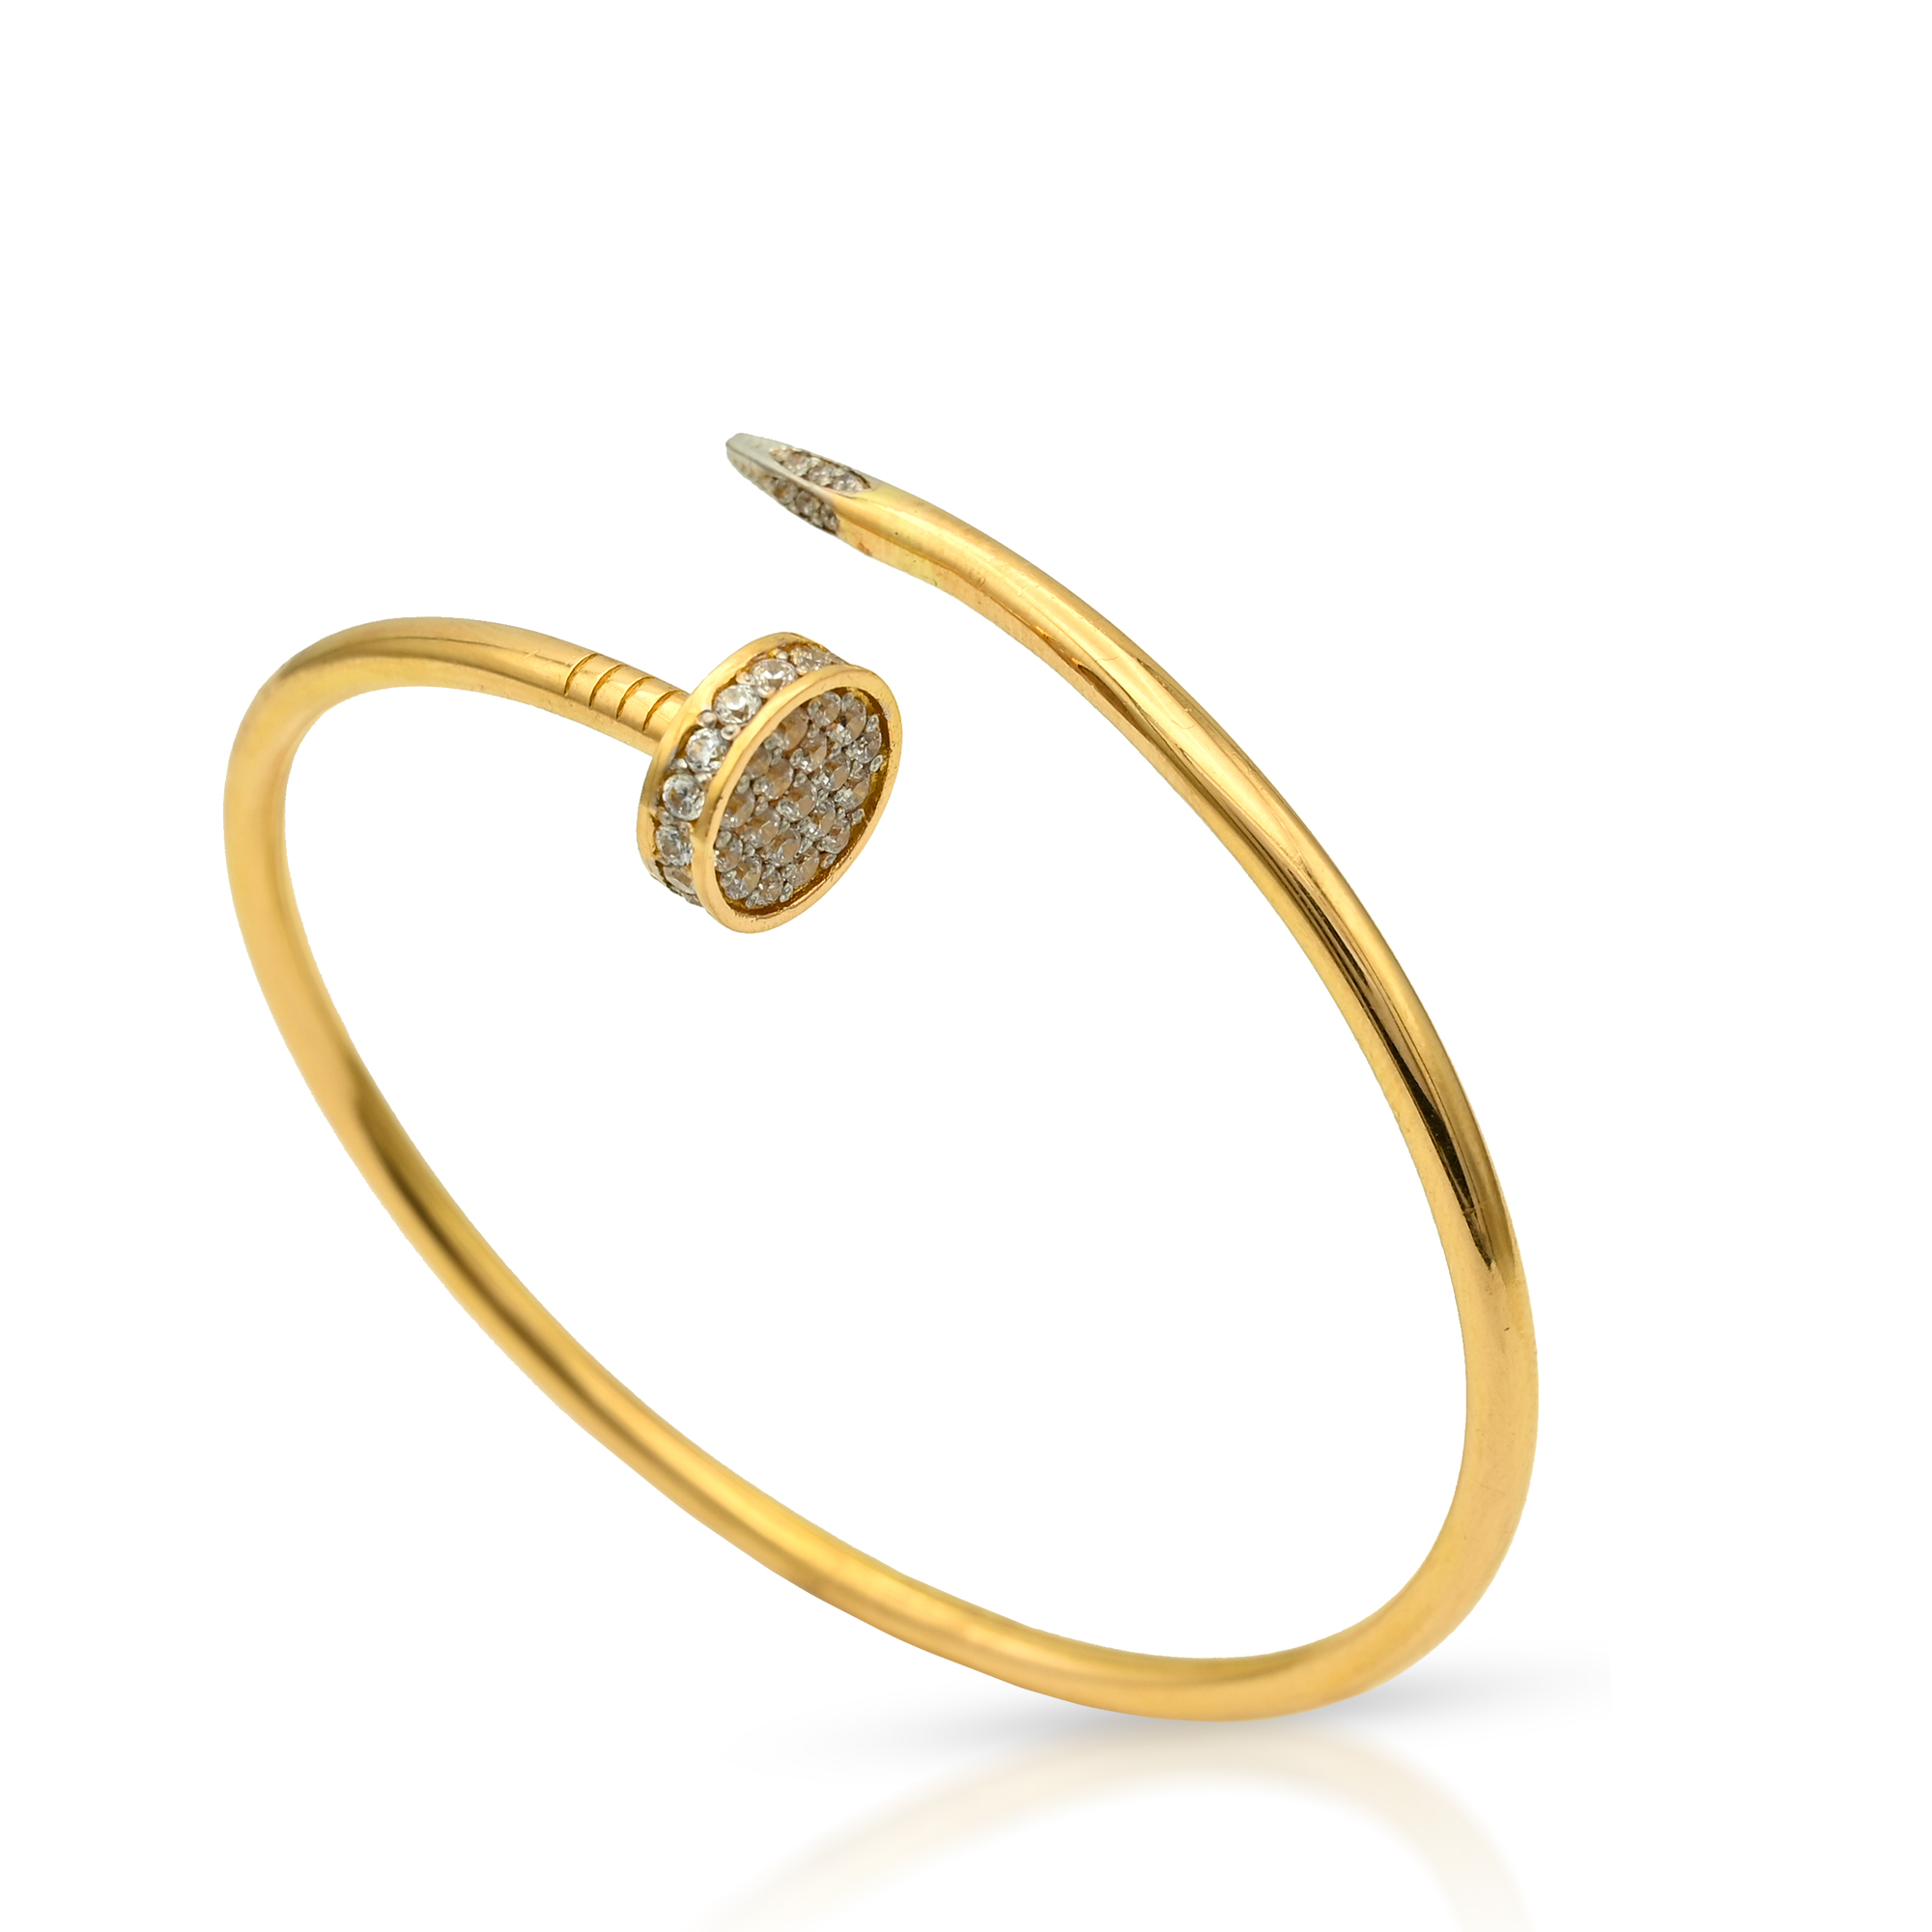 Ladies Bracelet Turkish Design 22k Gold | RATNALAYA JEWELLERS